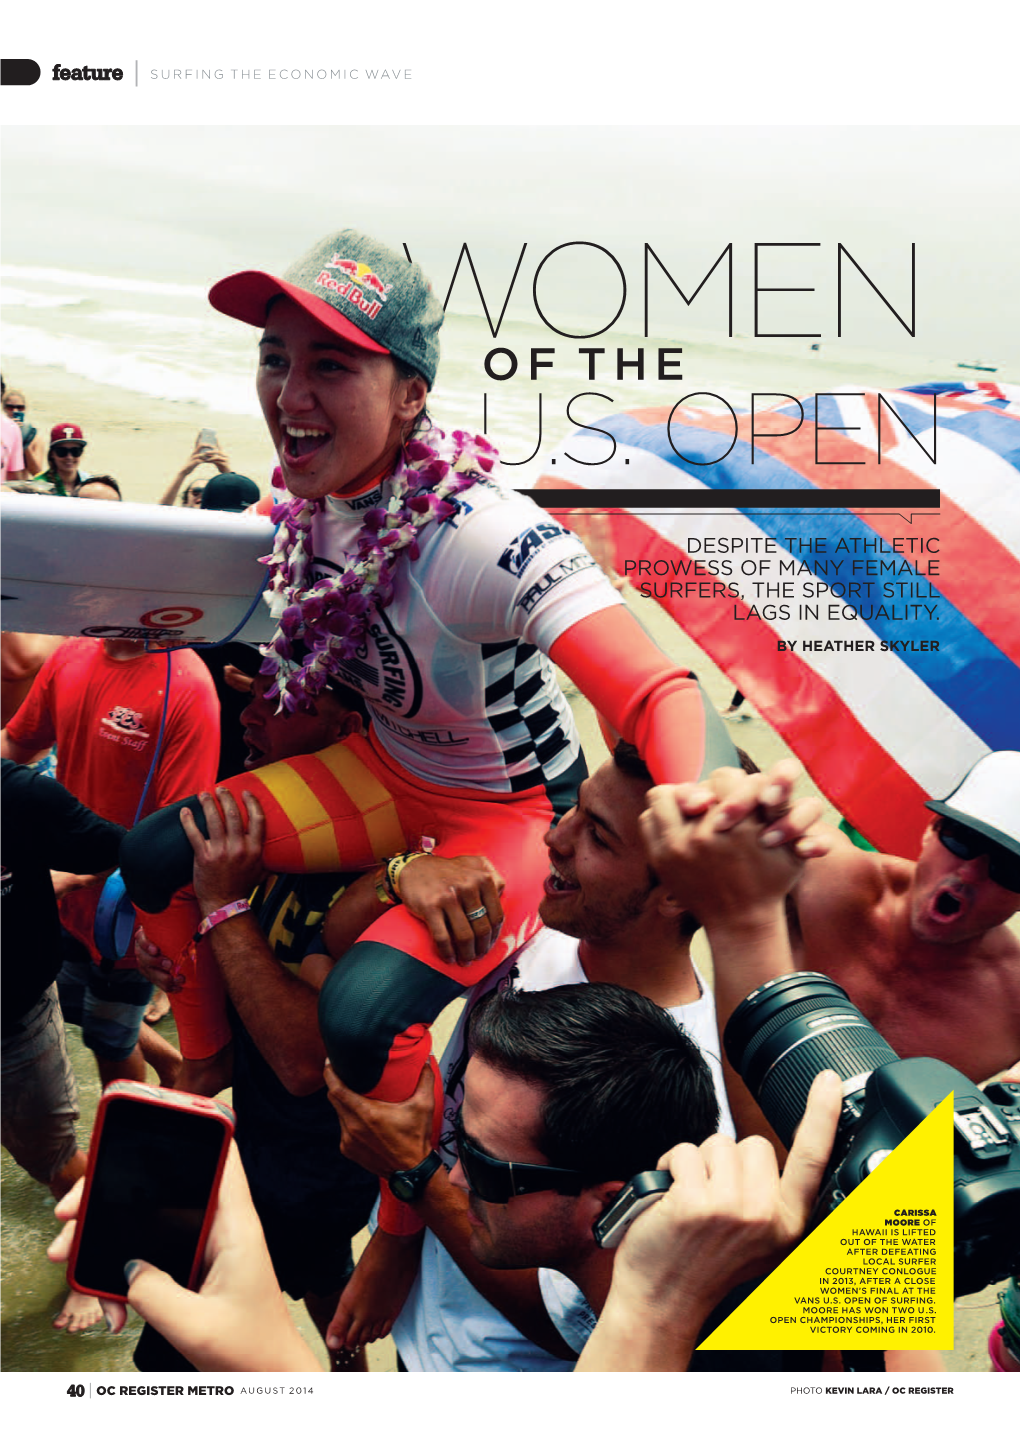 Women in Surfing